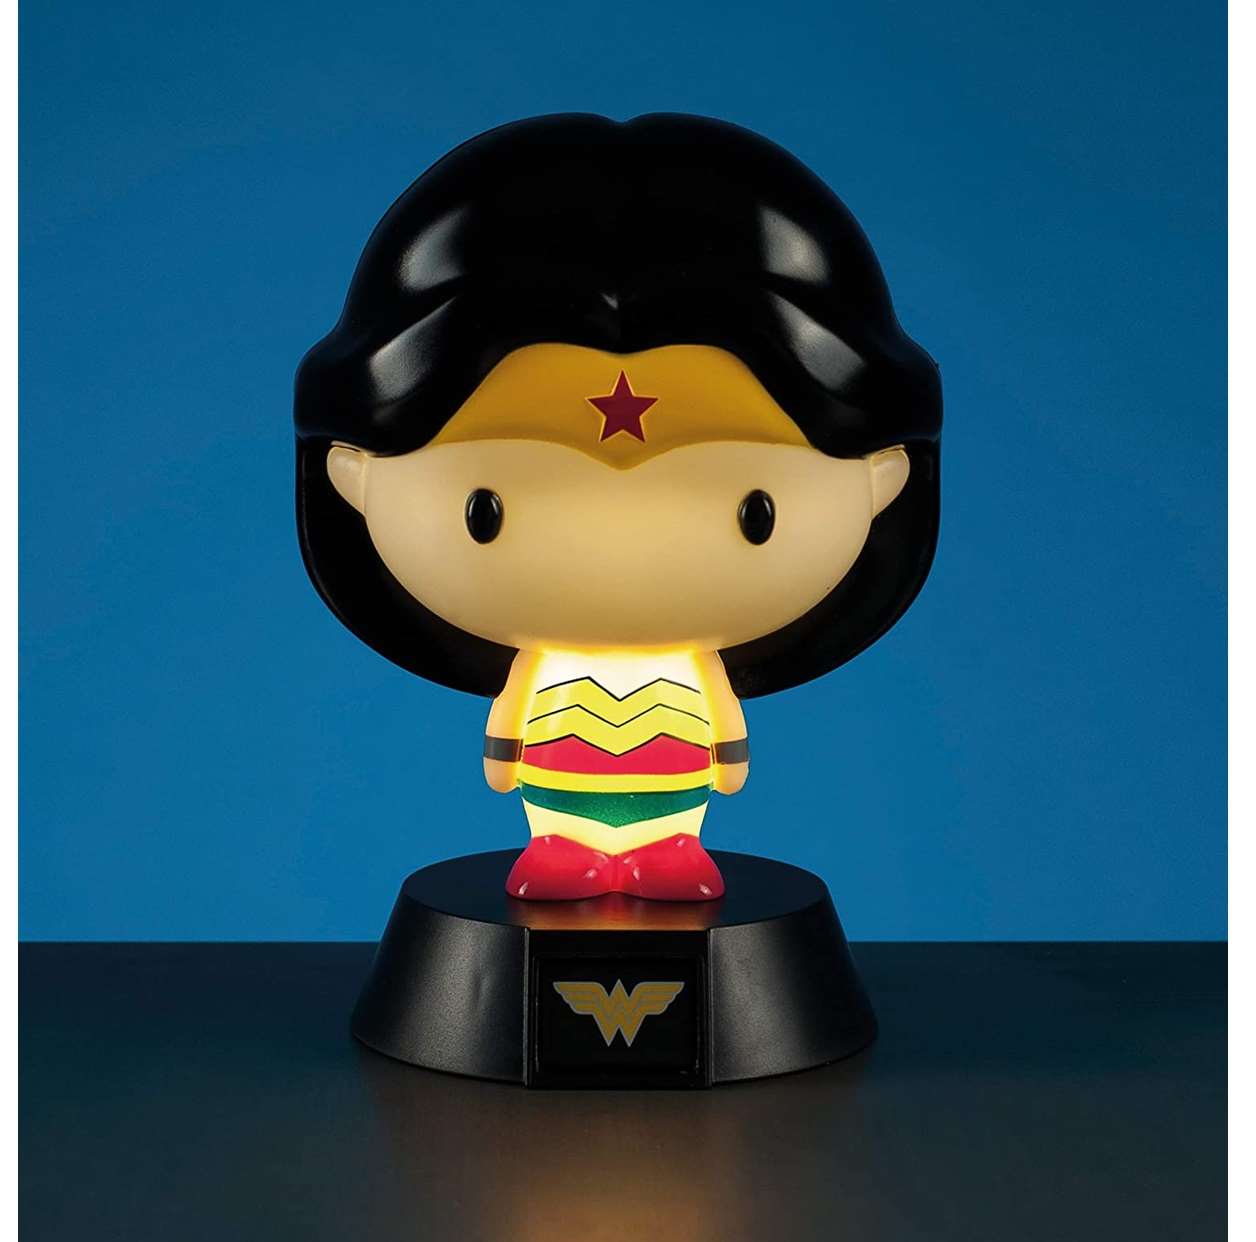 Lámpara Wonder Woman #005 Paladone Collect Them All Series 